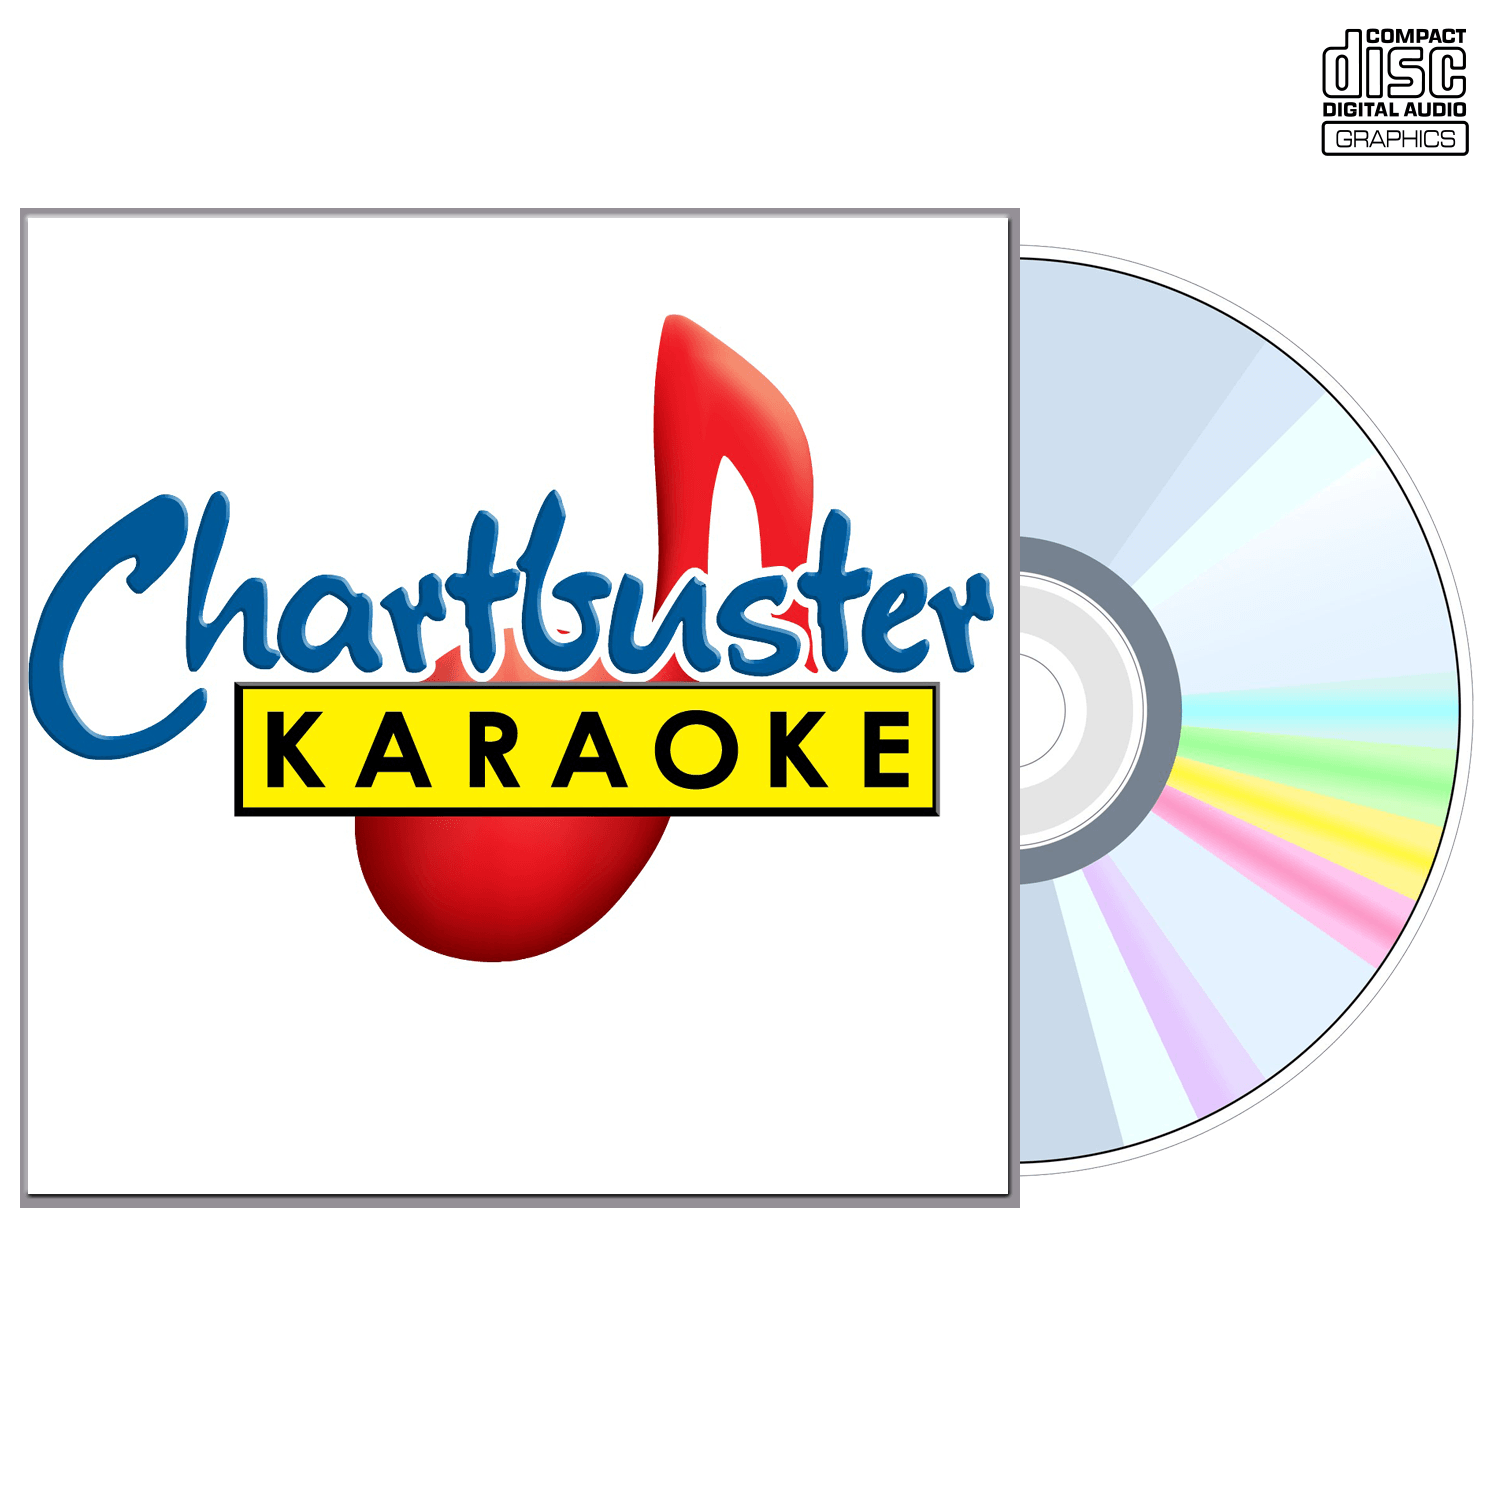 Toby Keith Vol 2 - CD+G - Chartbuster Karaoke - Karaoke Home Entertainment